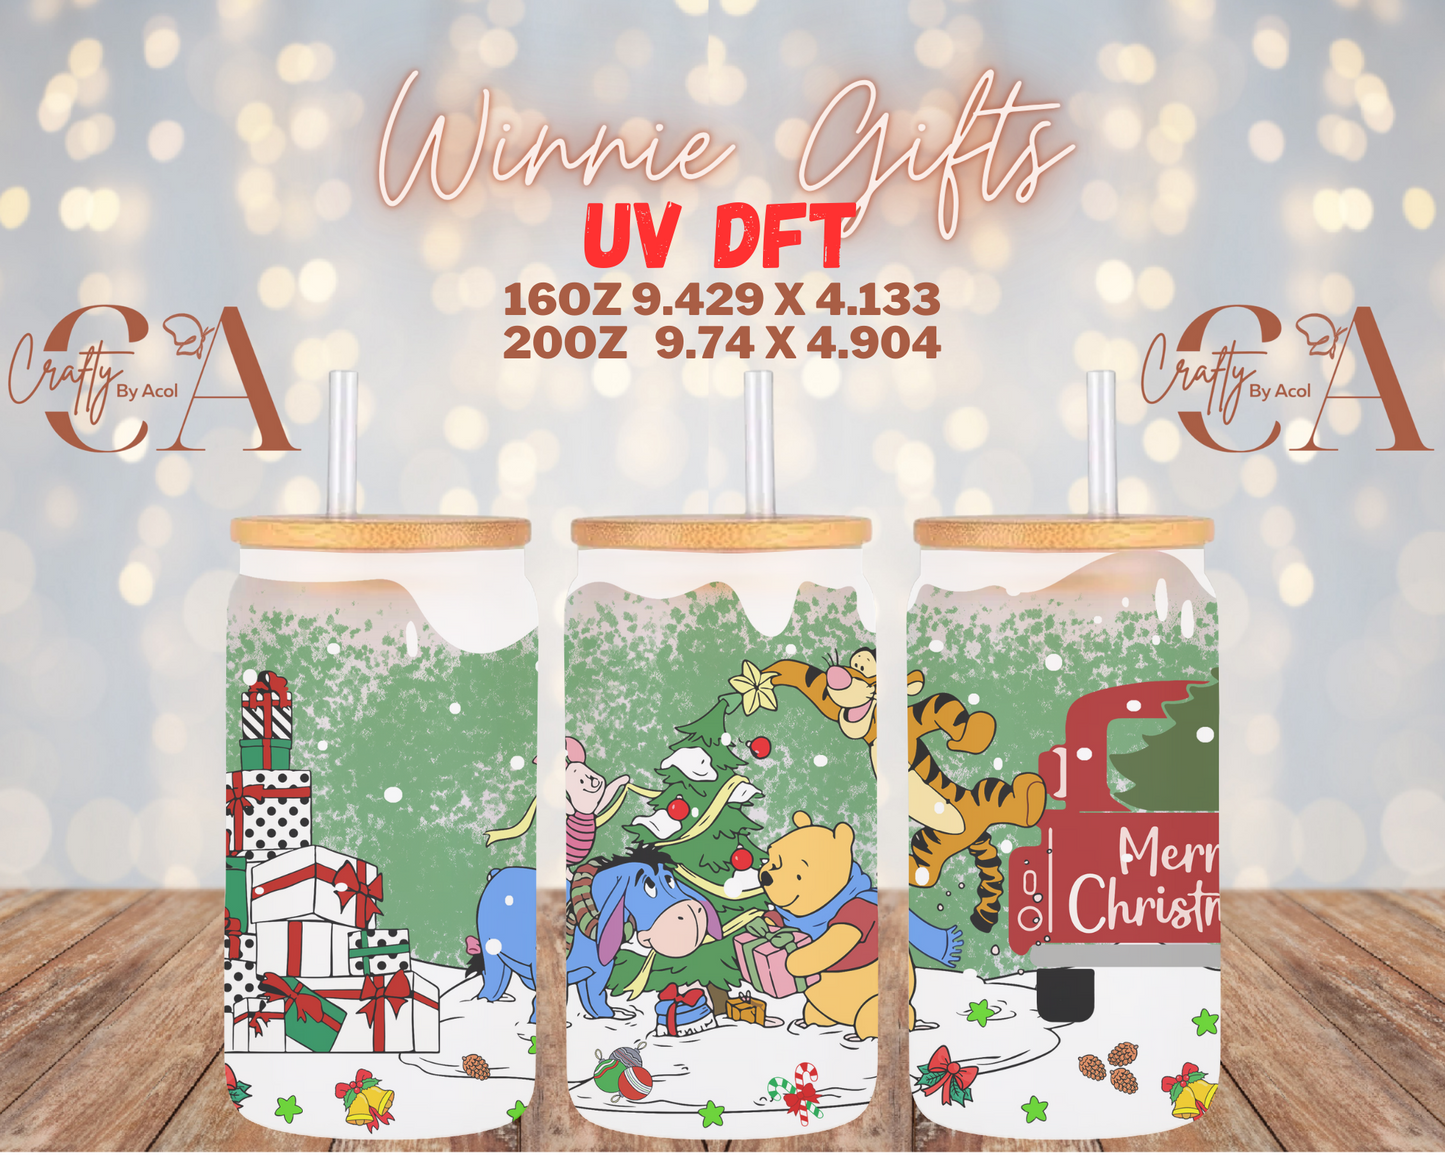 Winnie Gifts UV DFT Cup Wrap